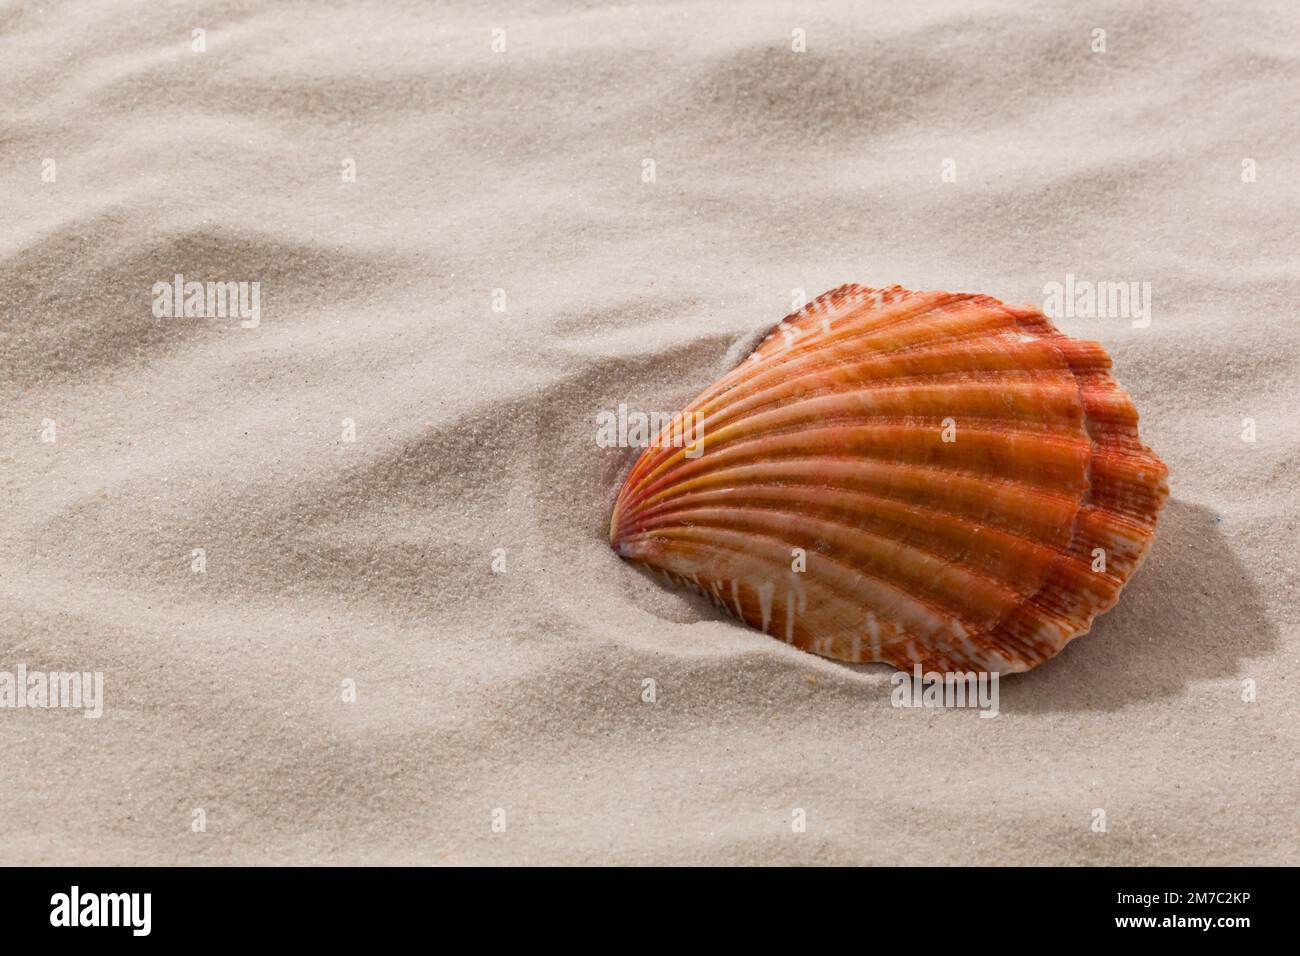 shell on a beach Stock Photo